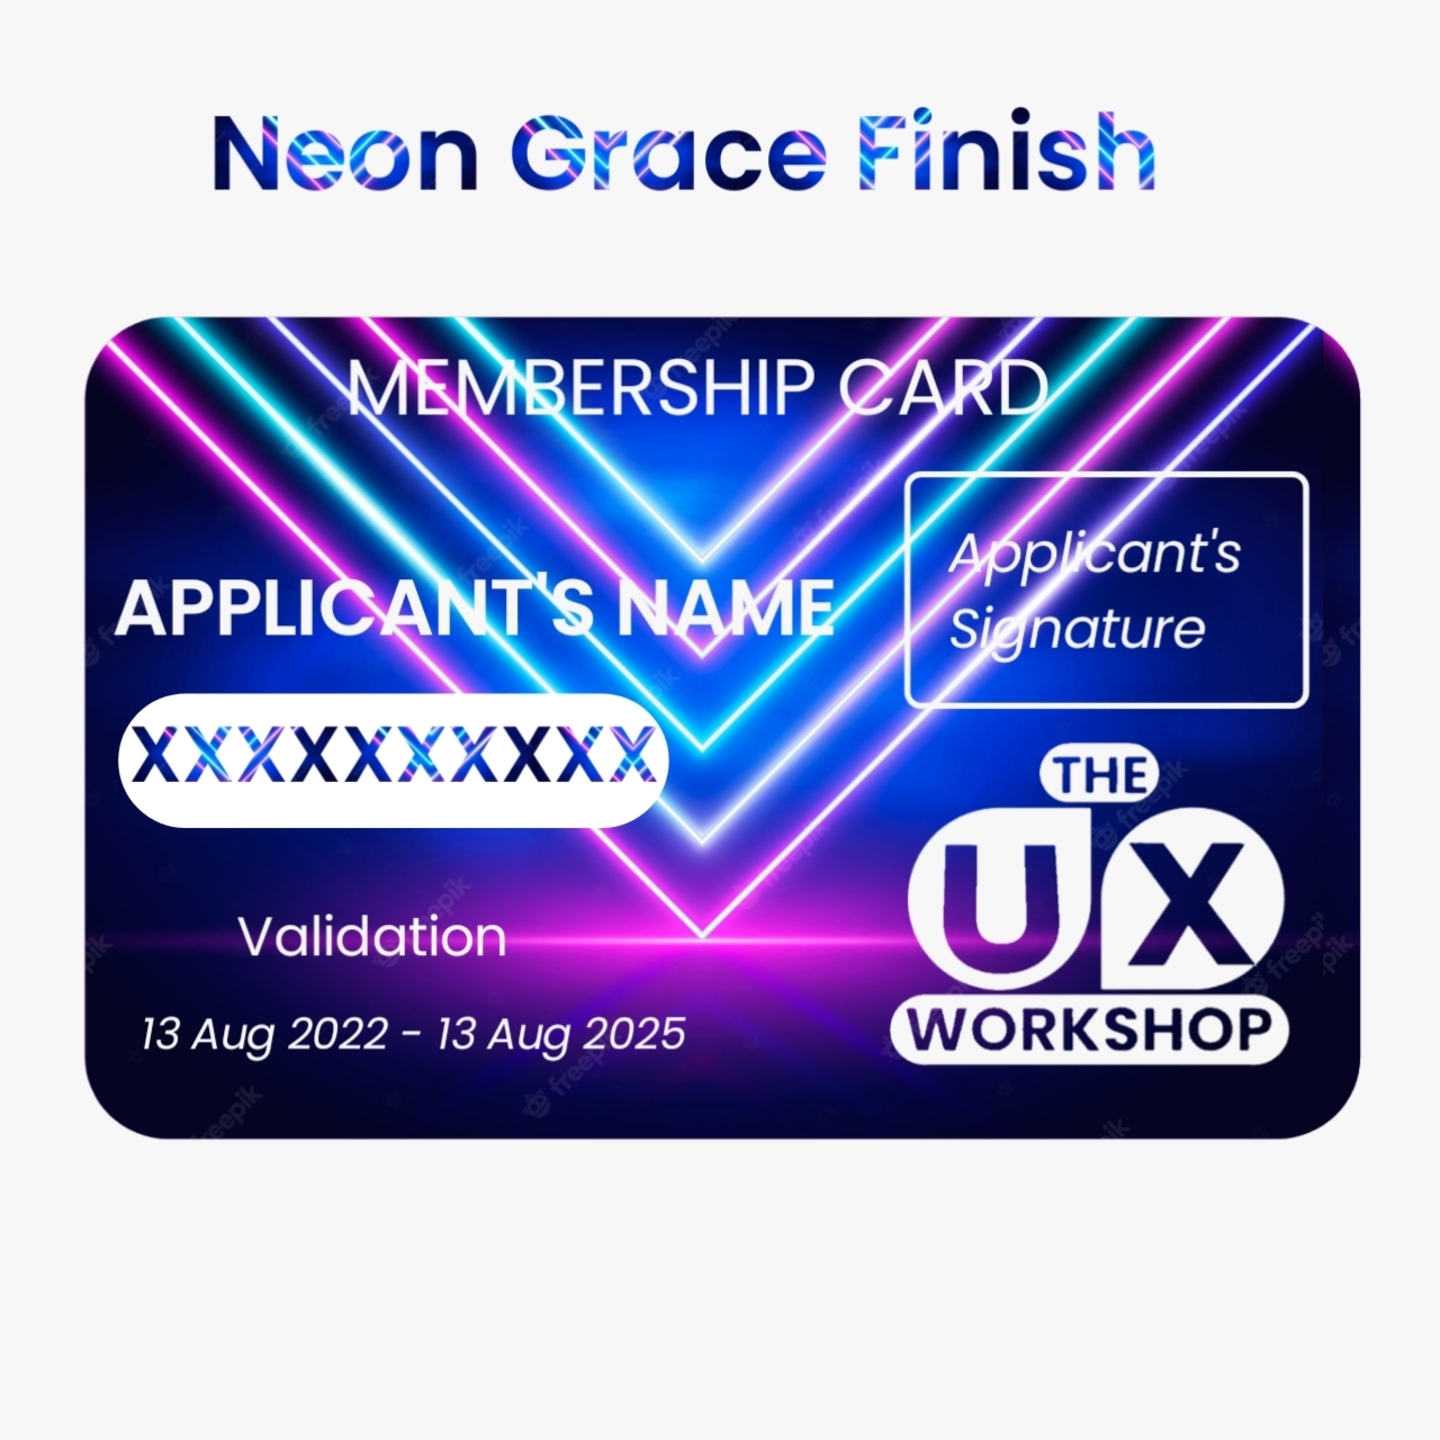 Neon Grace Finish for The UX Workshop Membership Card Skin 